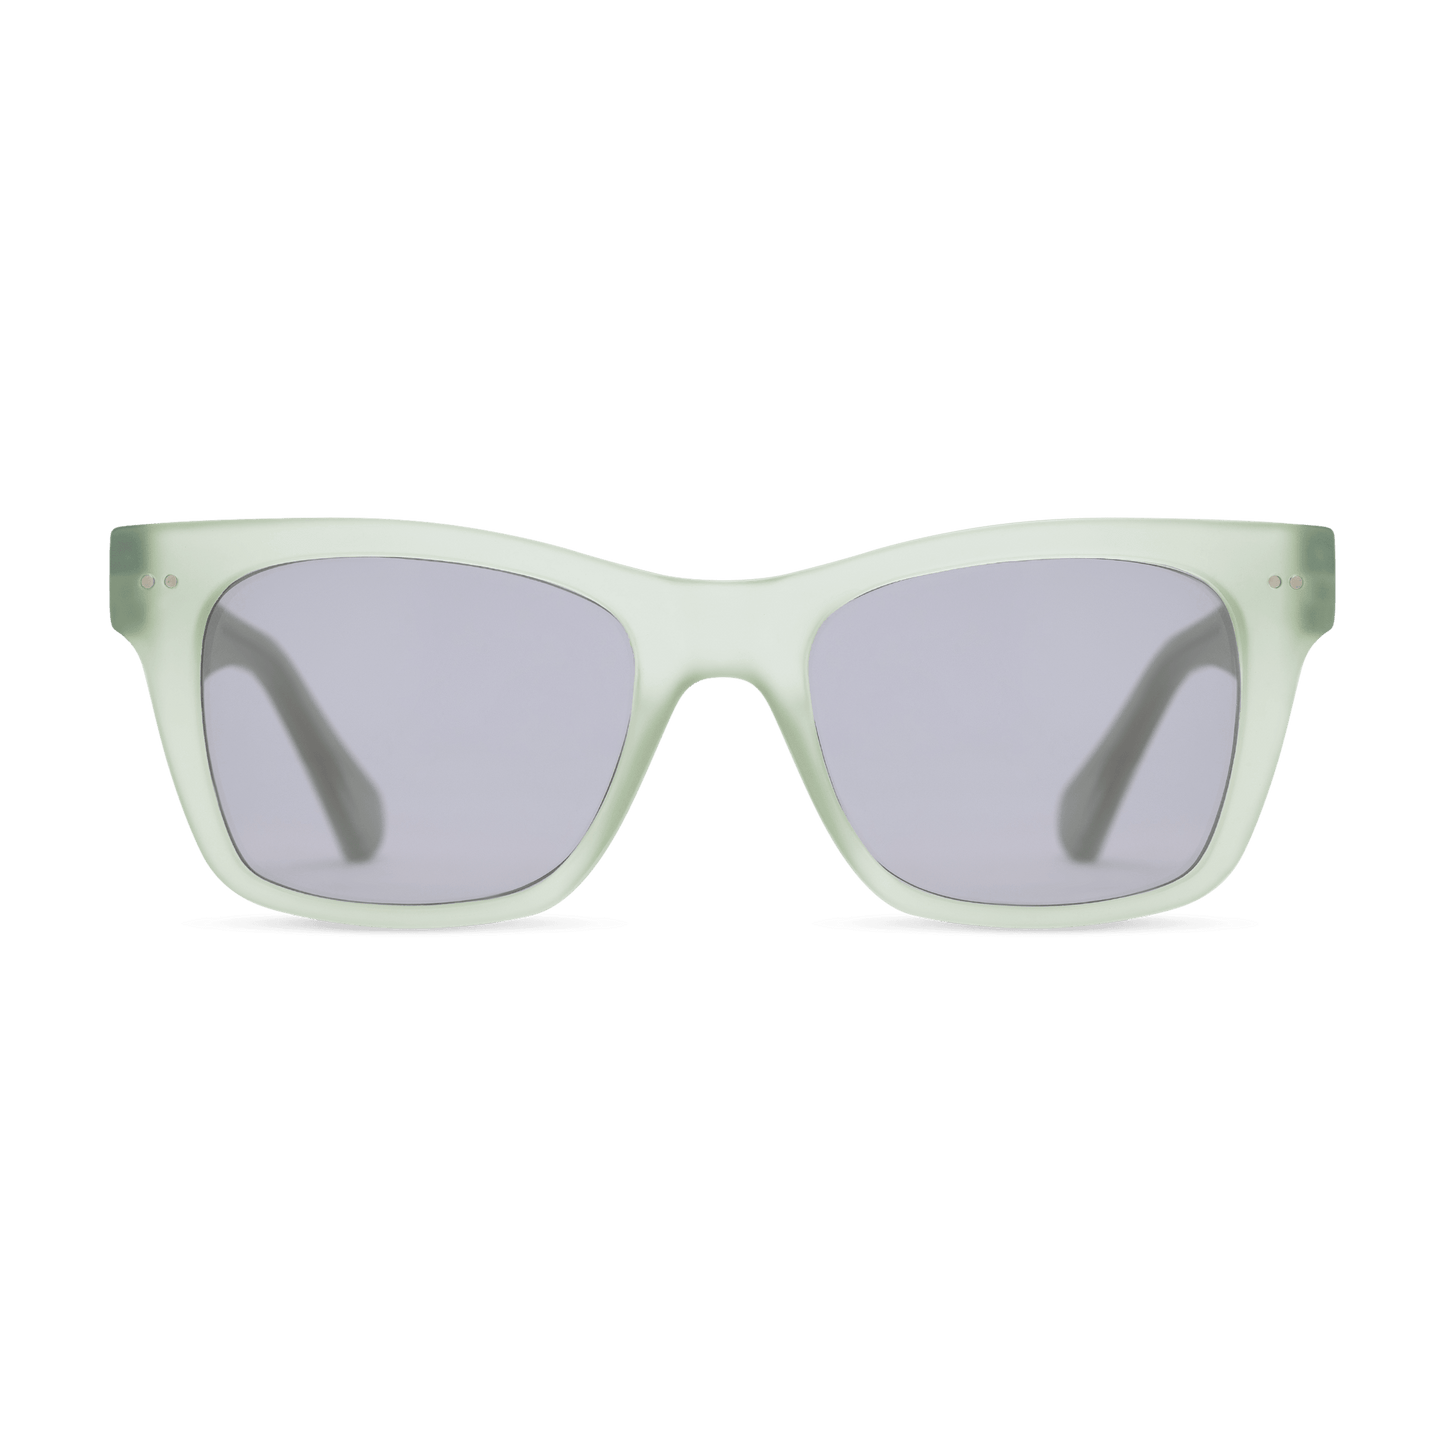 Cosmo Sun Eyewear LOOK OPTIC Sun Reader (Mint) +0.00